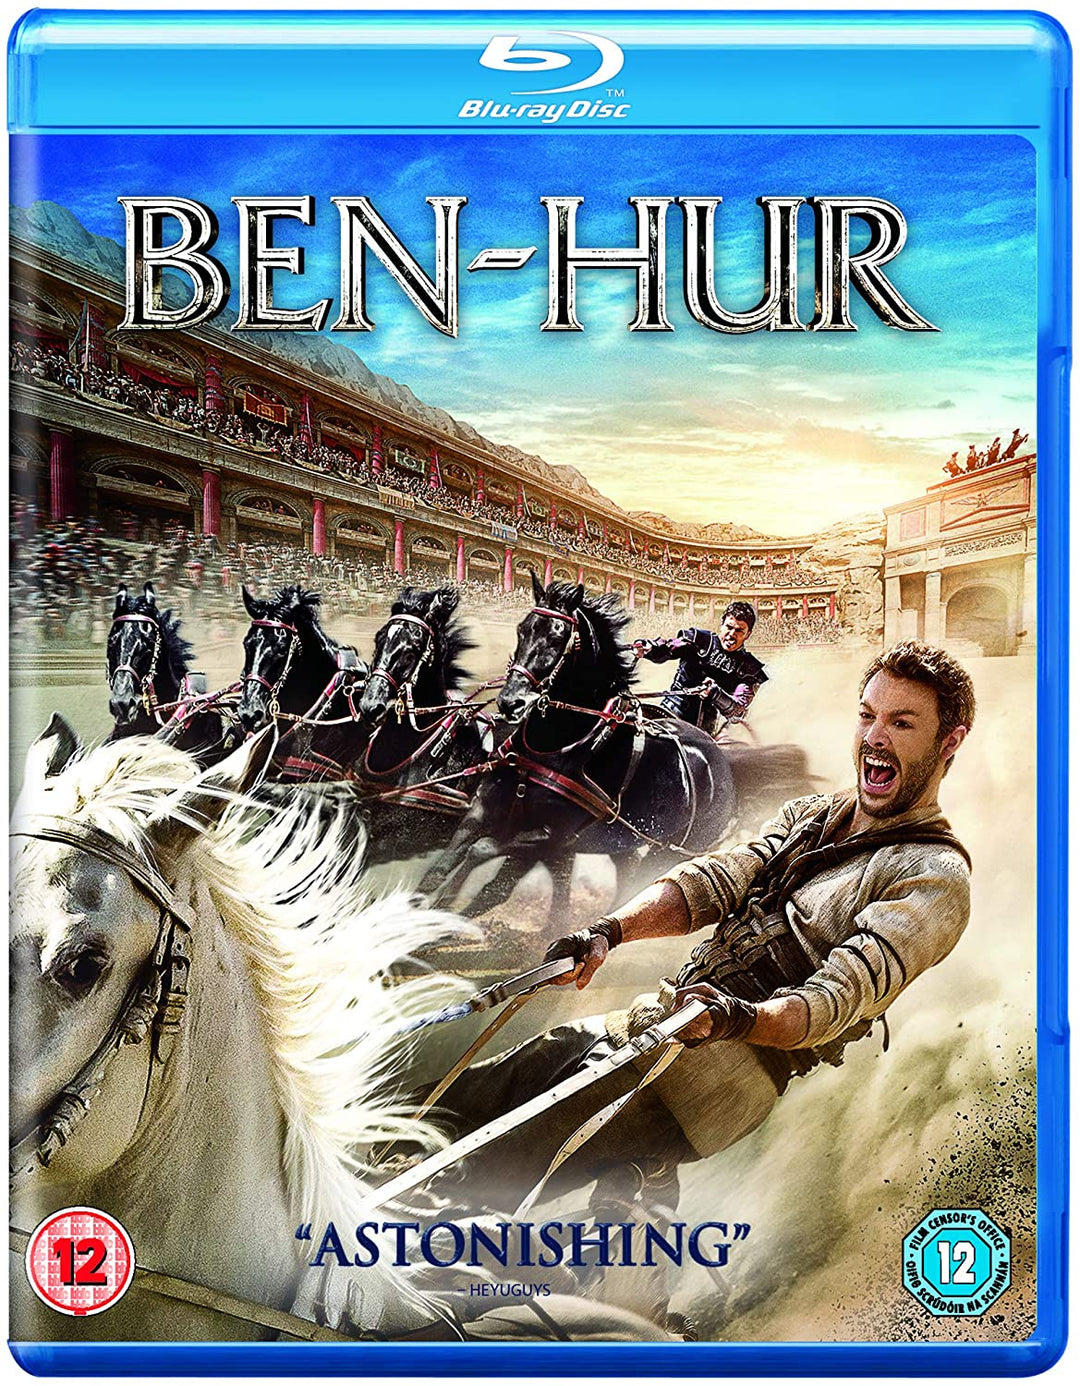 Ben Hur [Blu-ray] [2017] [Regio vrij]